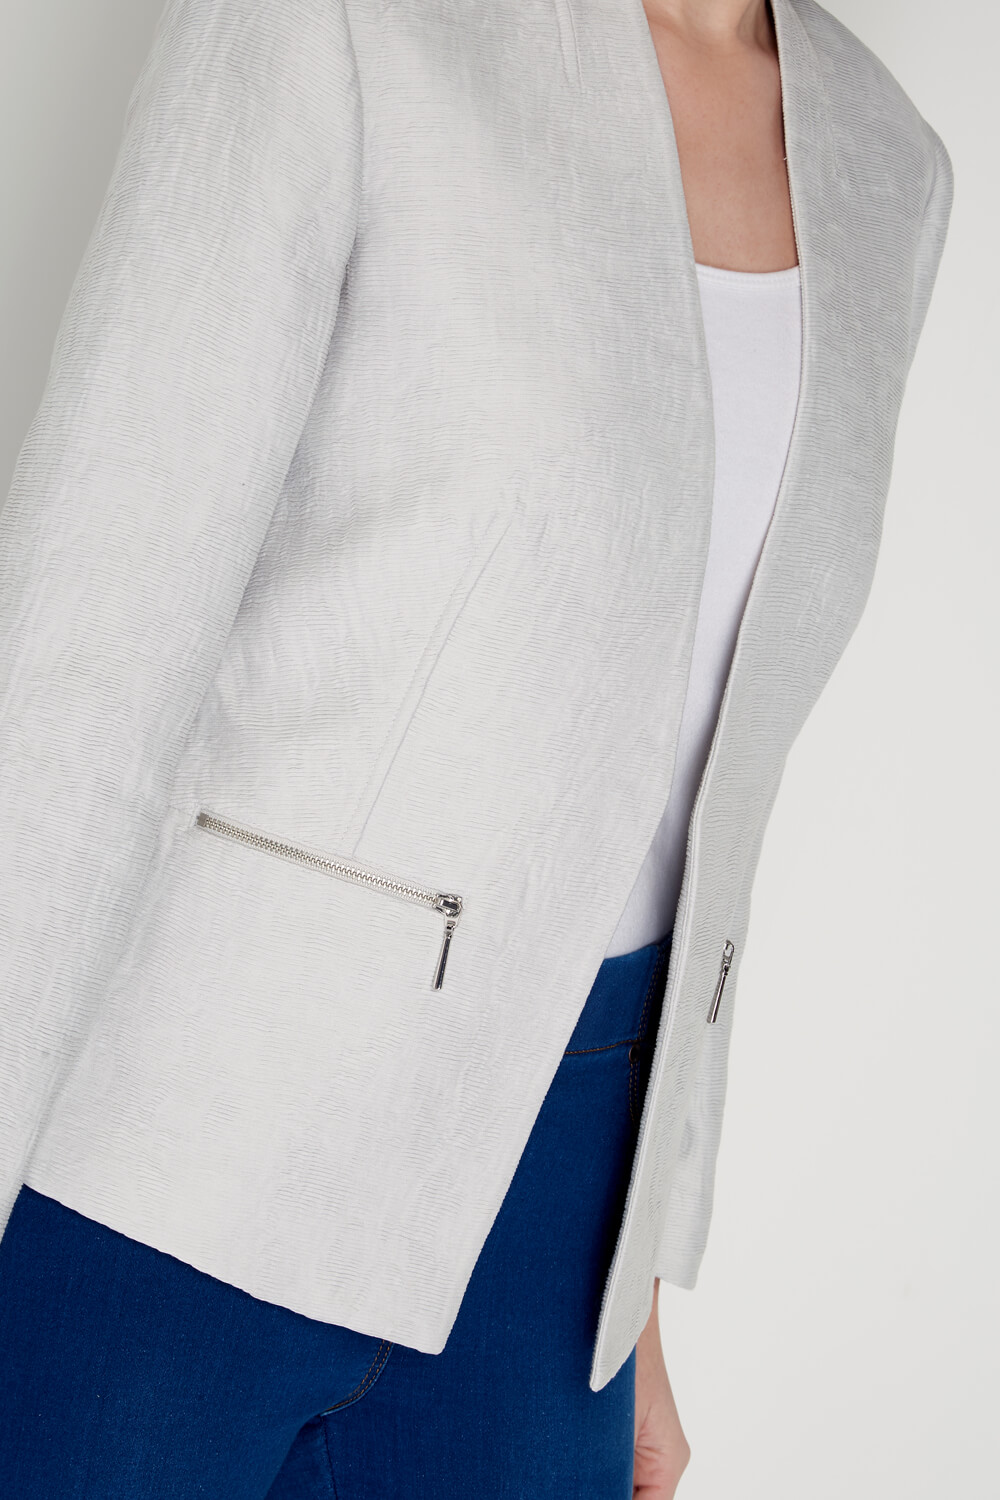 Light Grey Pleat Tailored Jacket, Image 3 of 5